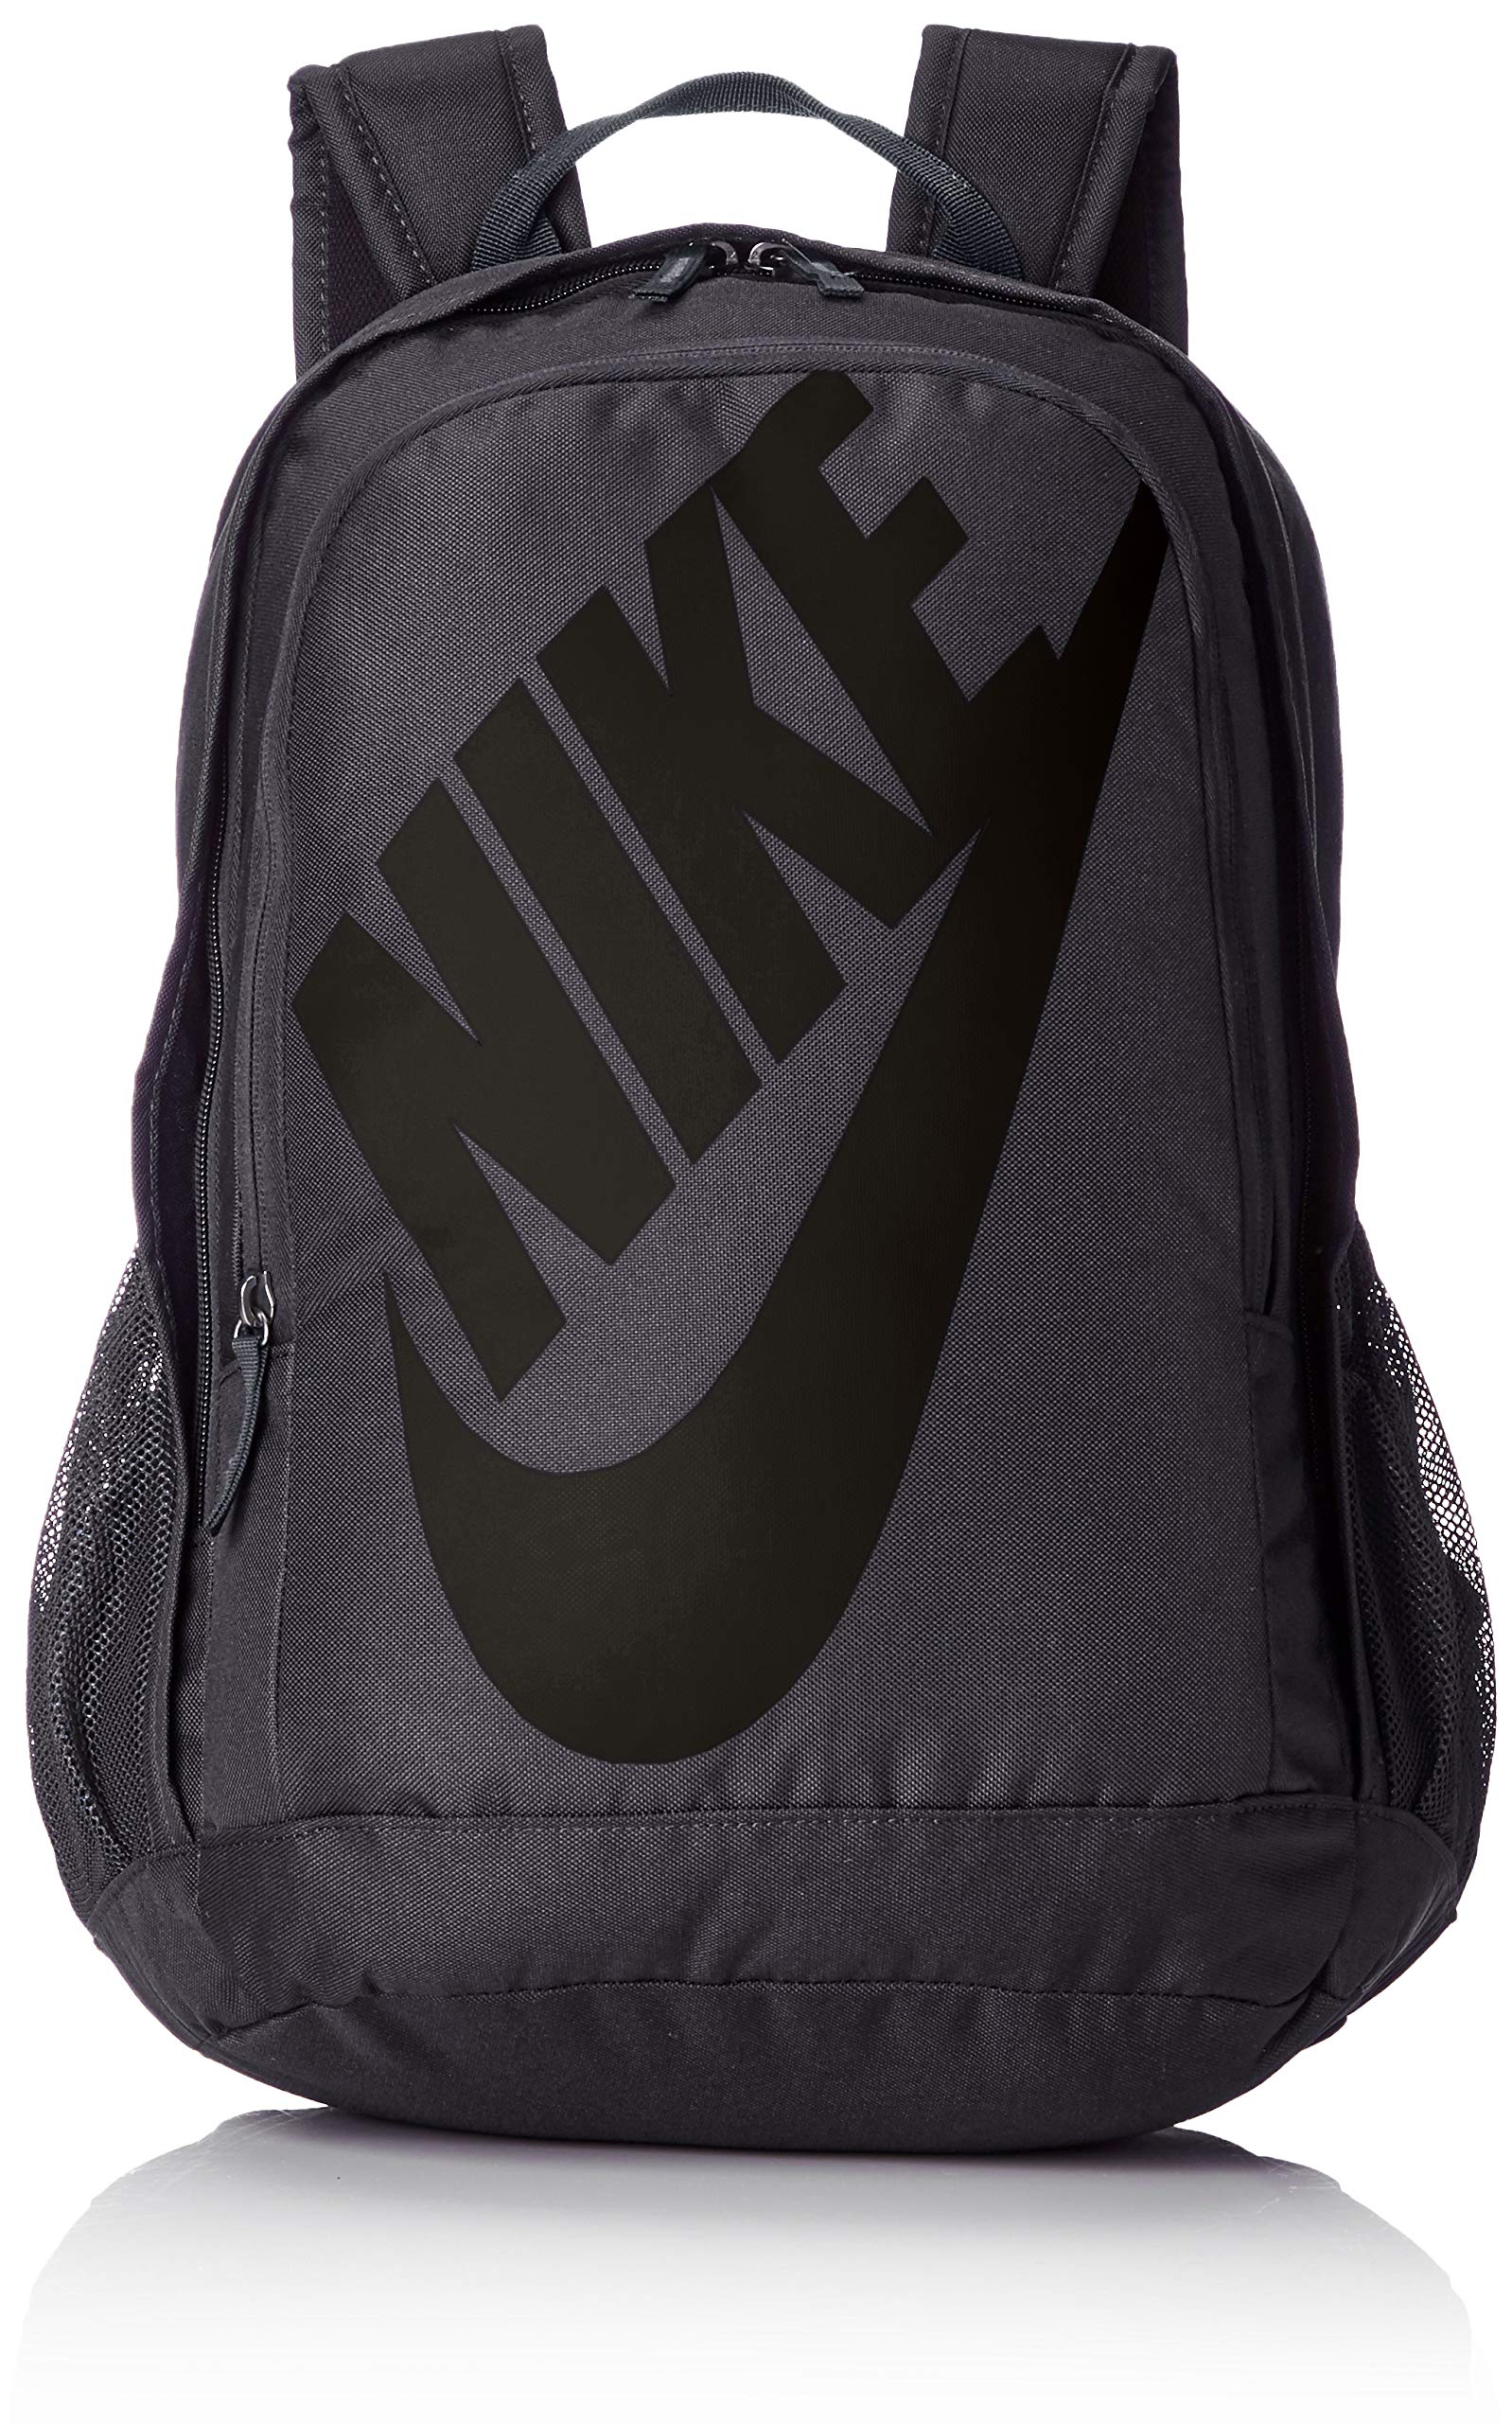 Nike Hayward Futura Backpack for Sale in Papillion, NE - OfferUp